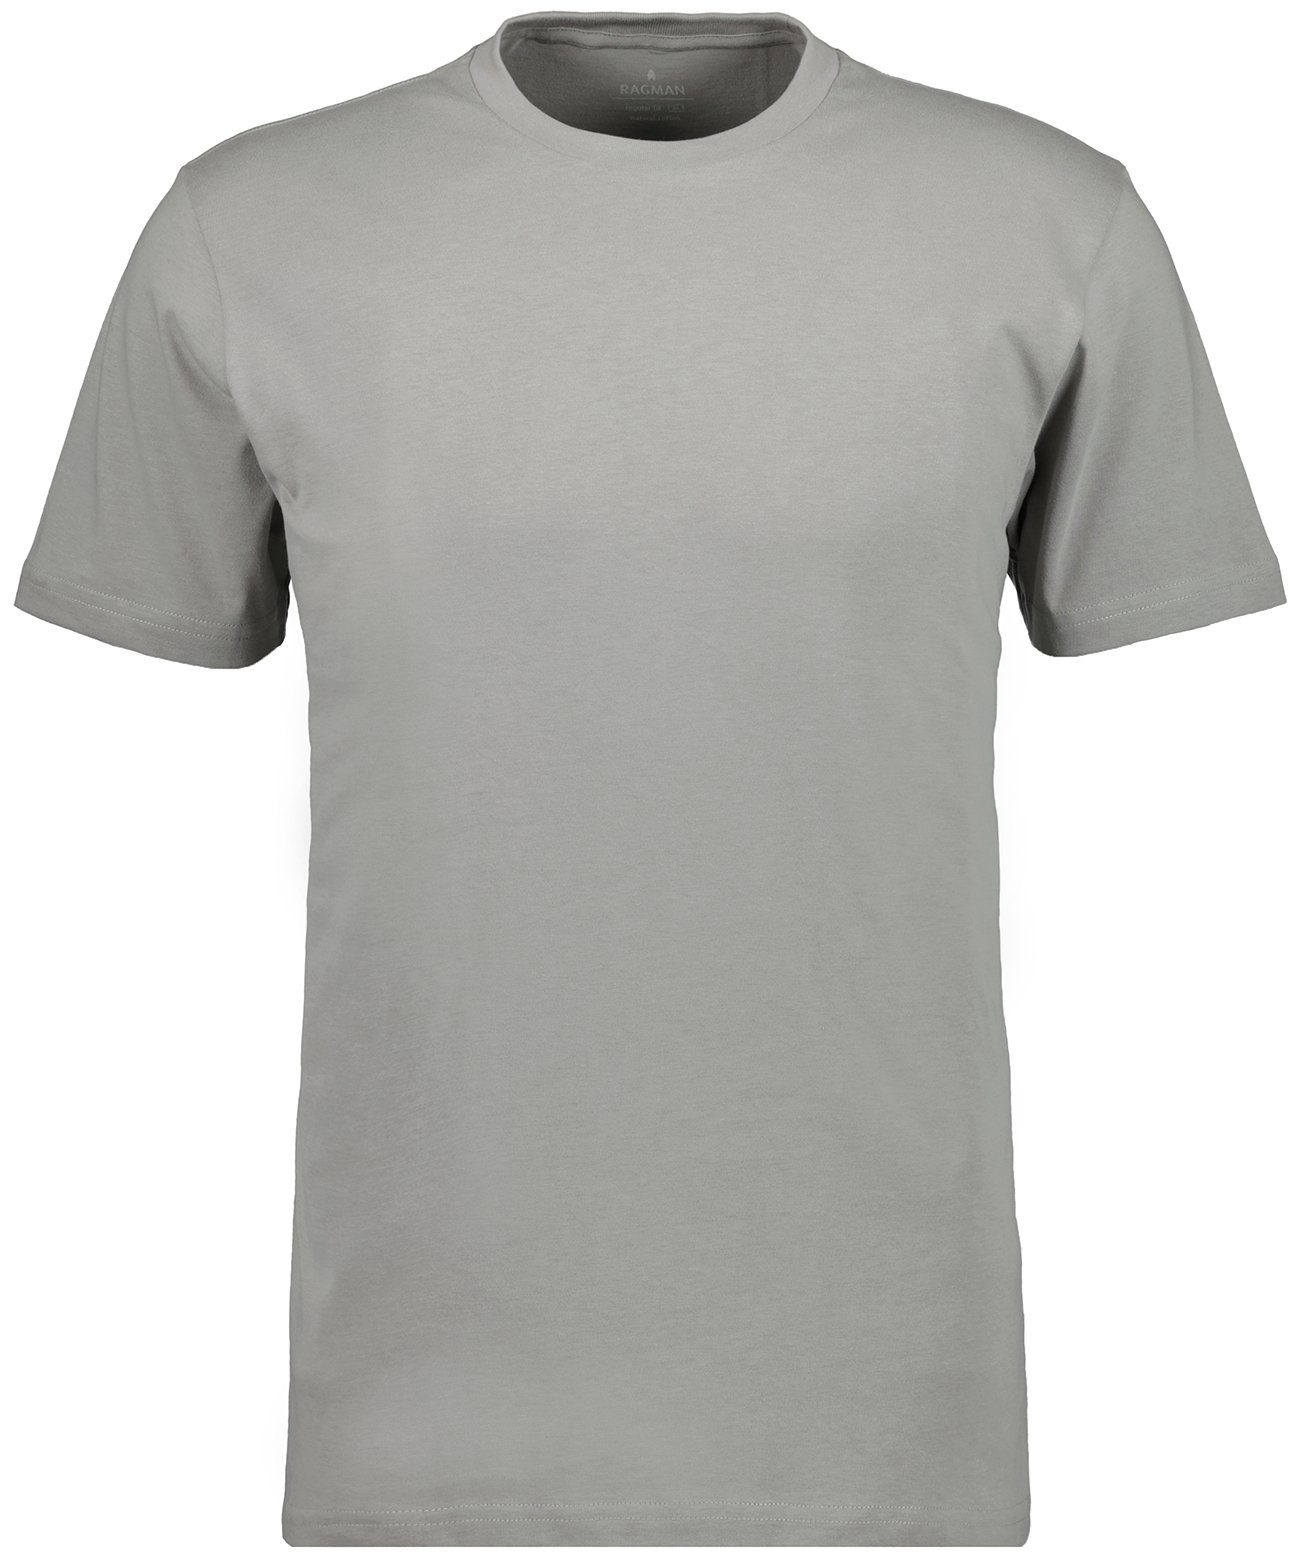 RAGMAN Longshirt Grau-Beige-215 | T-Shirts